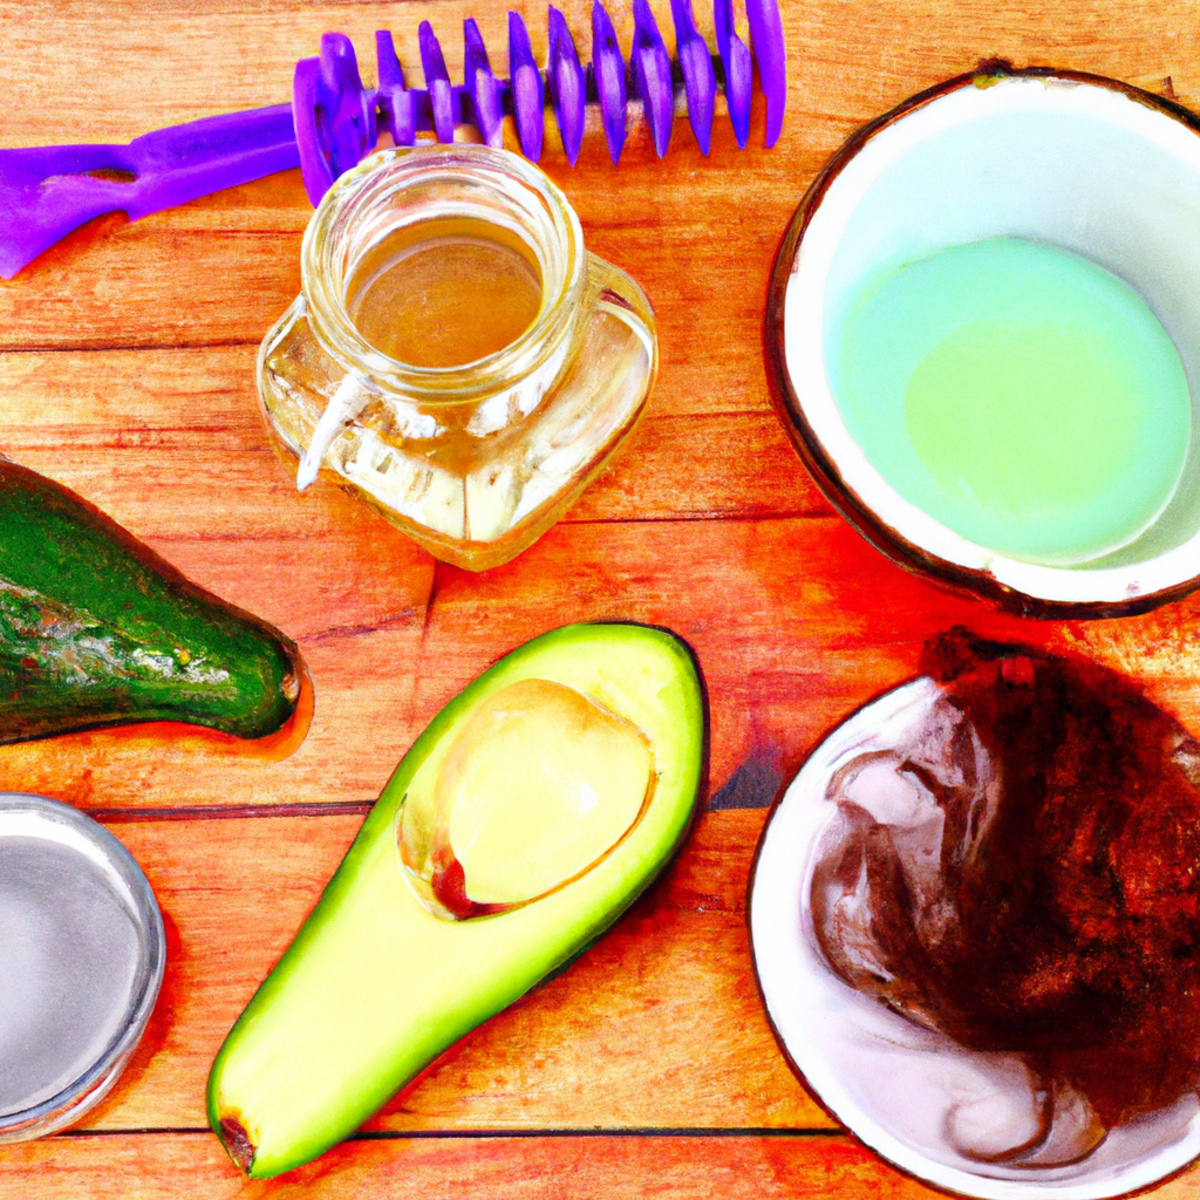 DIY hair care items on wooden table: coconut oil, avocado, apple cider vinegar, honey, comb, brush. Natural lighting.